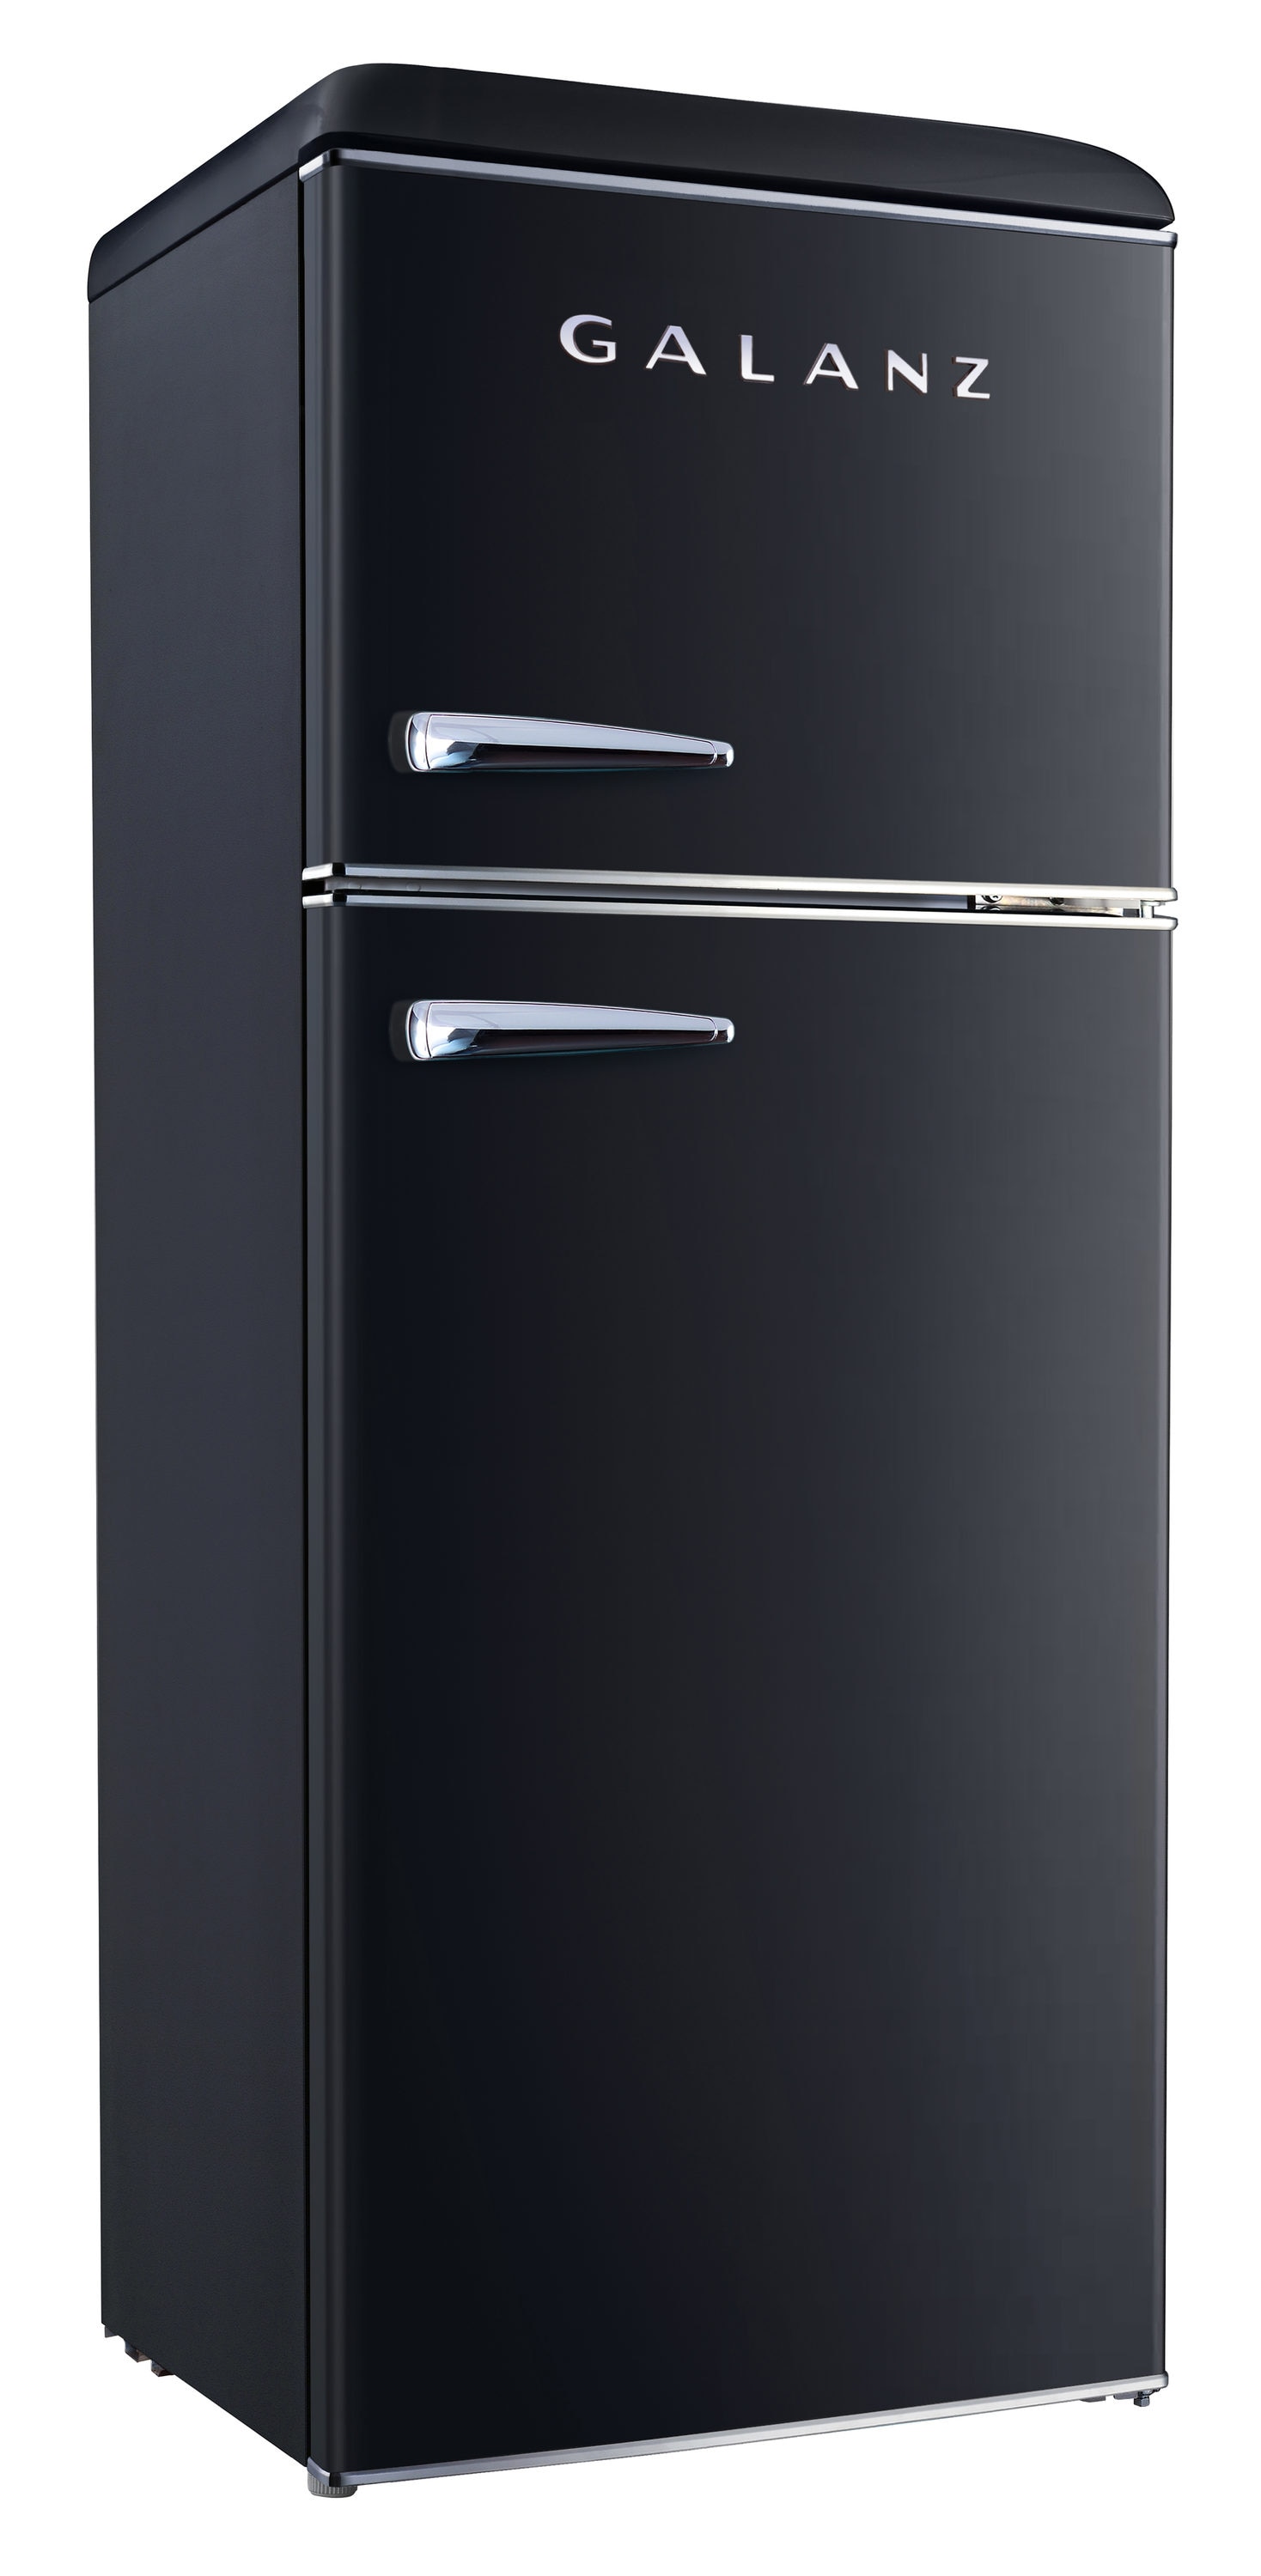 Galanz GLR10TBKF 10 Cu. ft. Black Refrigerator with Top Mount Freezer